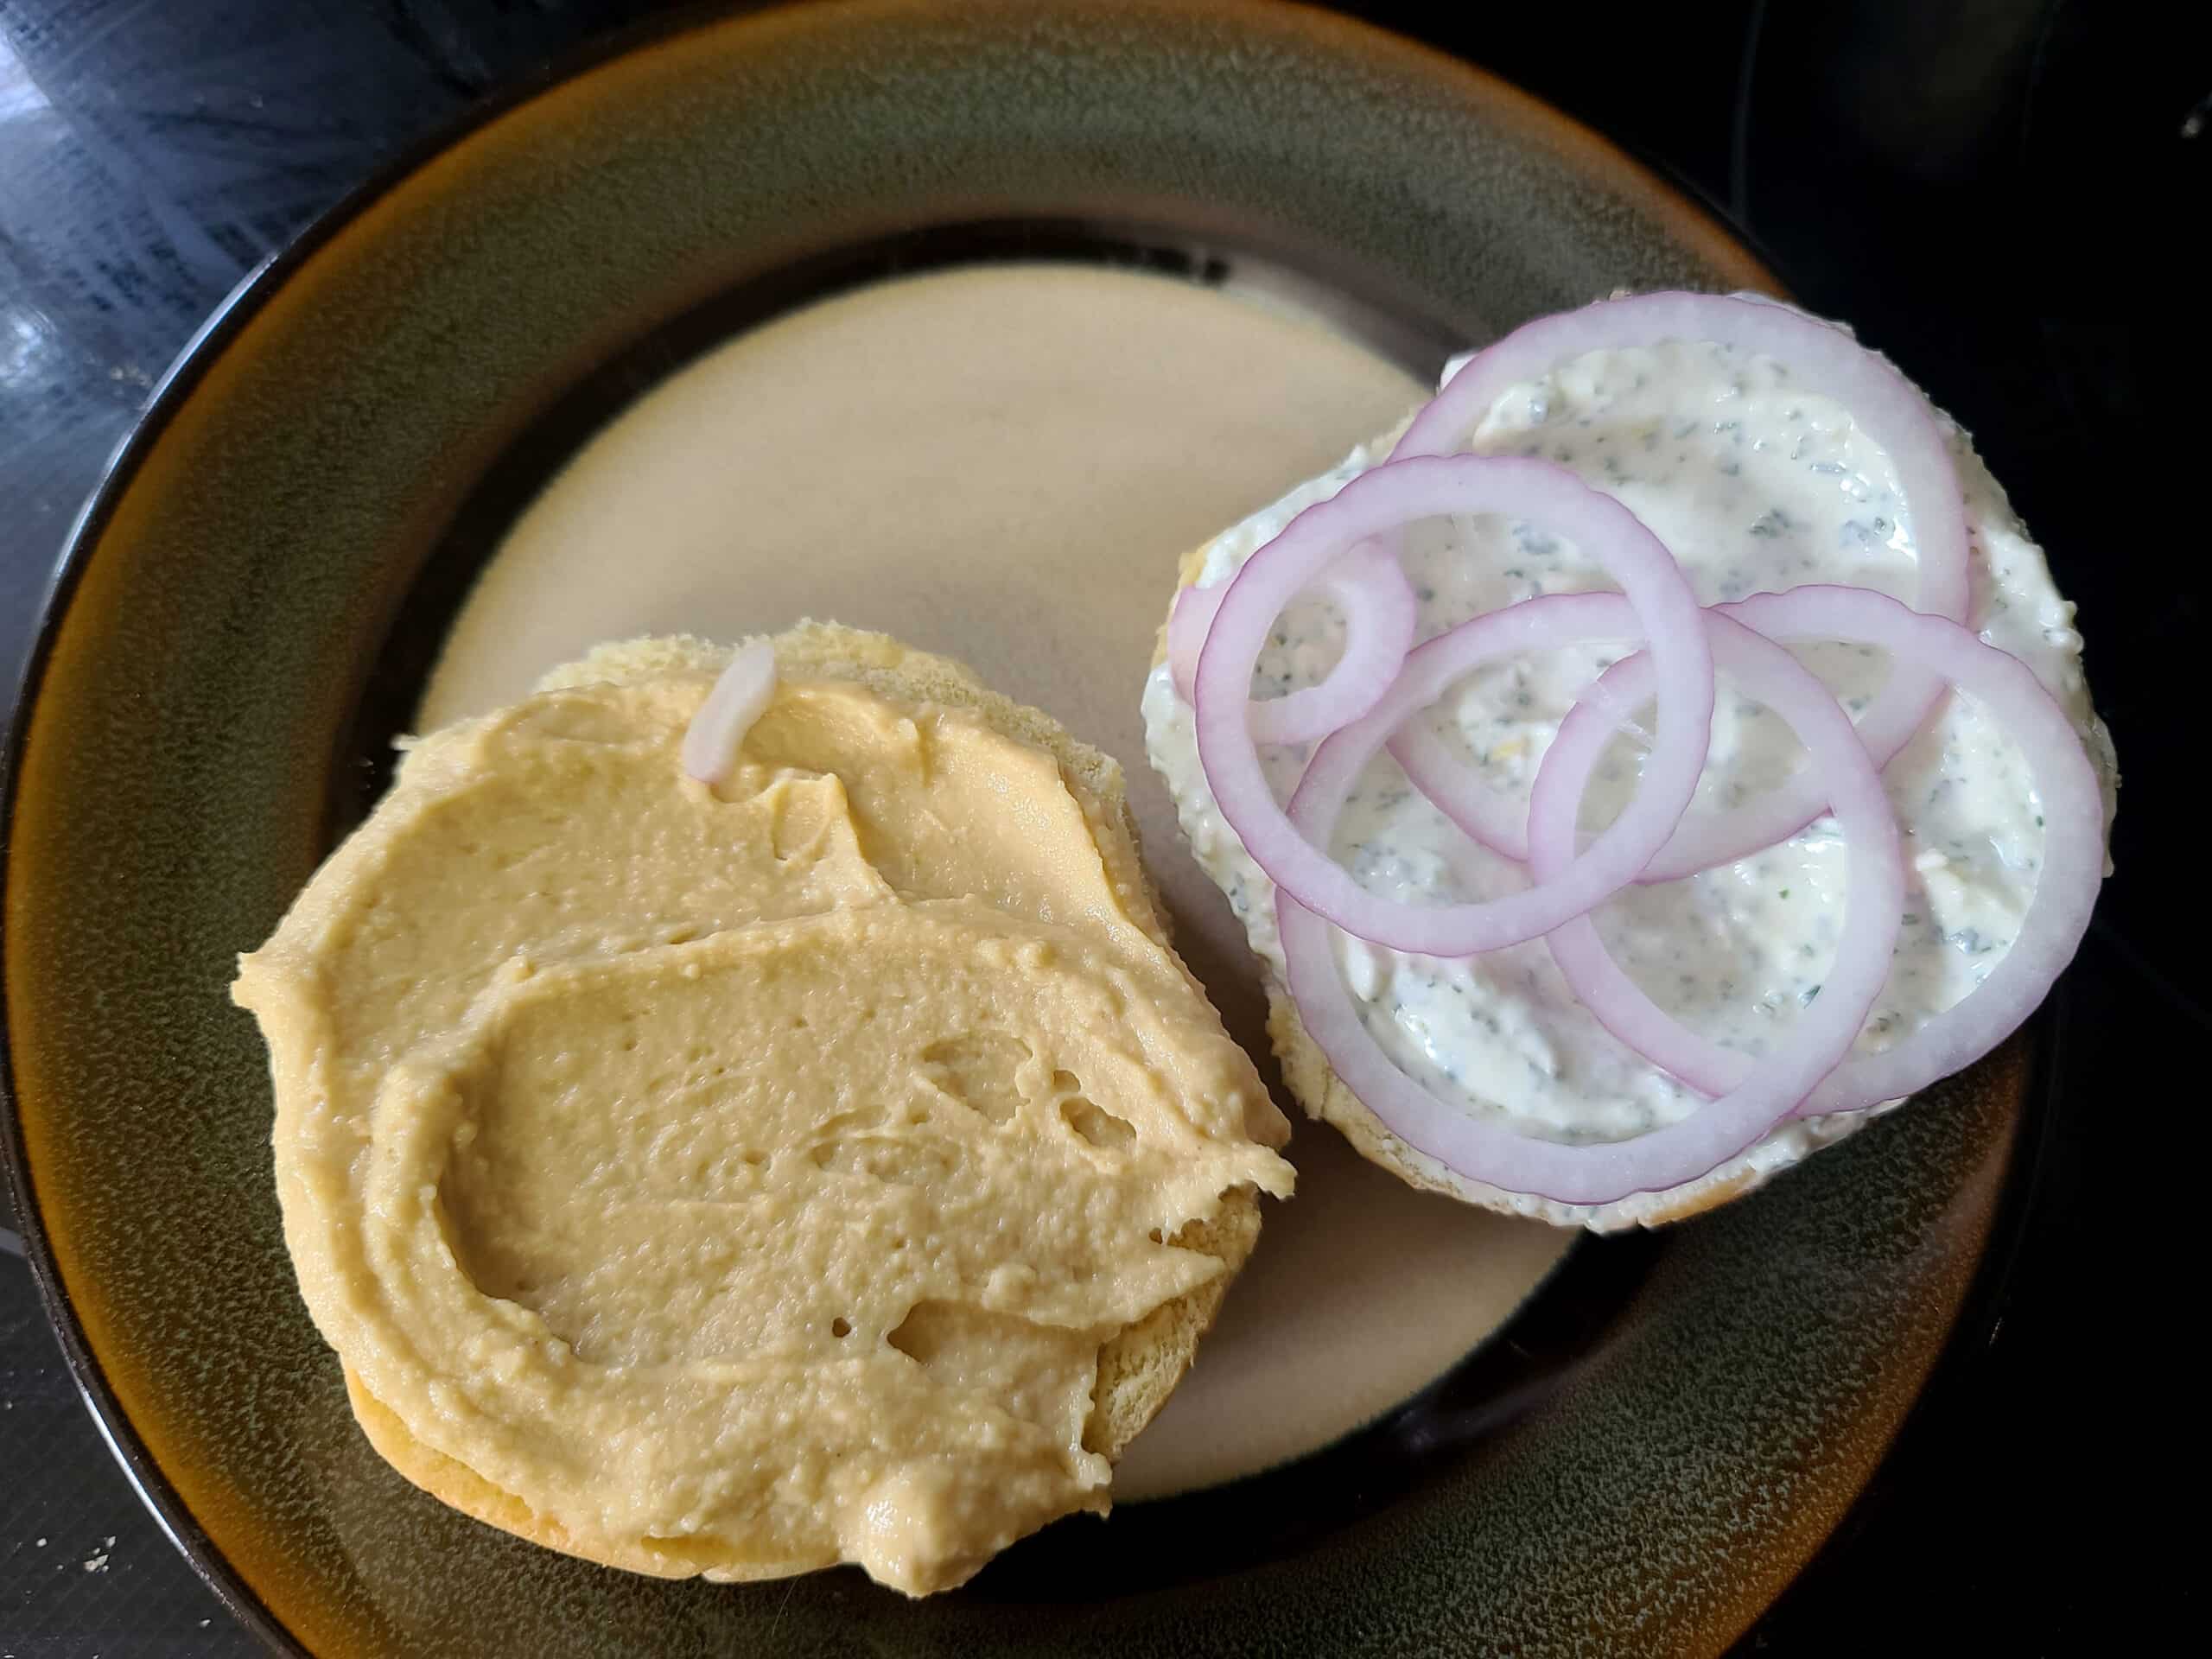 A hamburger bun prepared with hummus, red onions, and labneh feta mint spread.